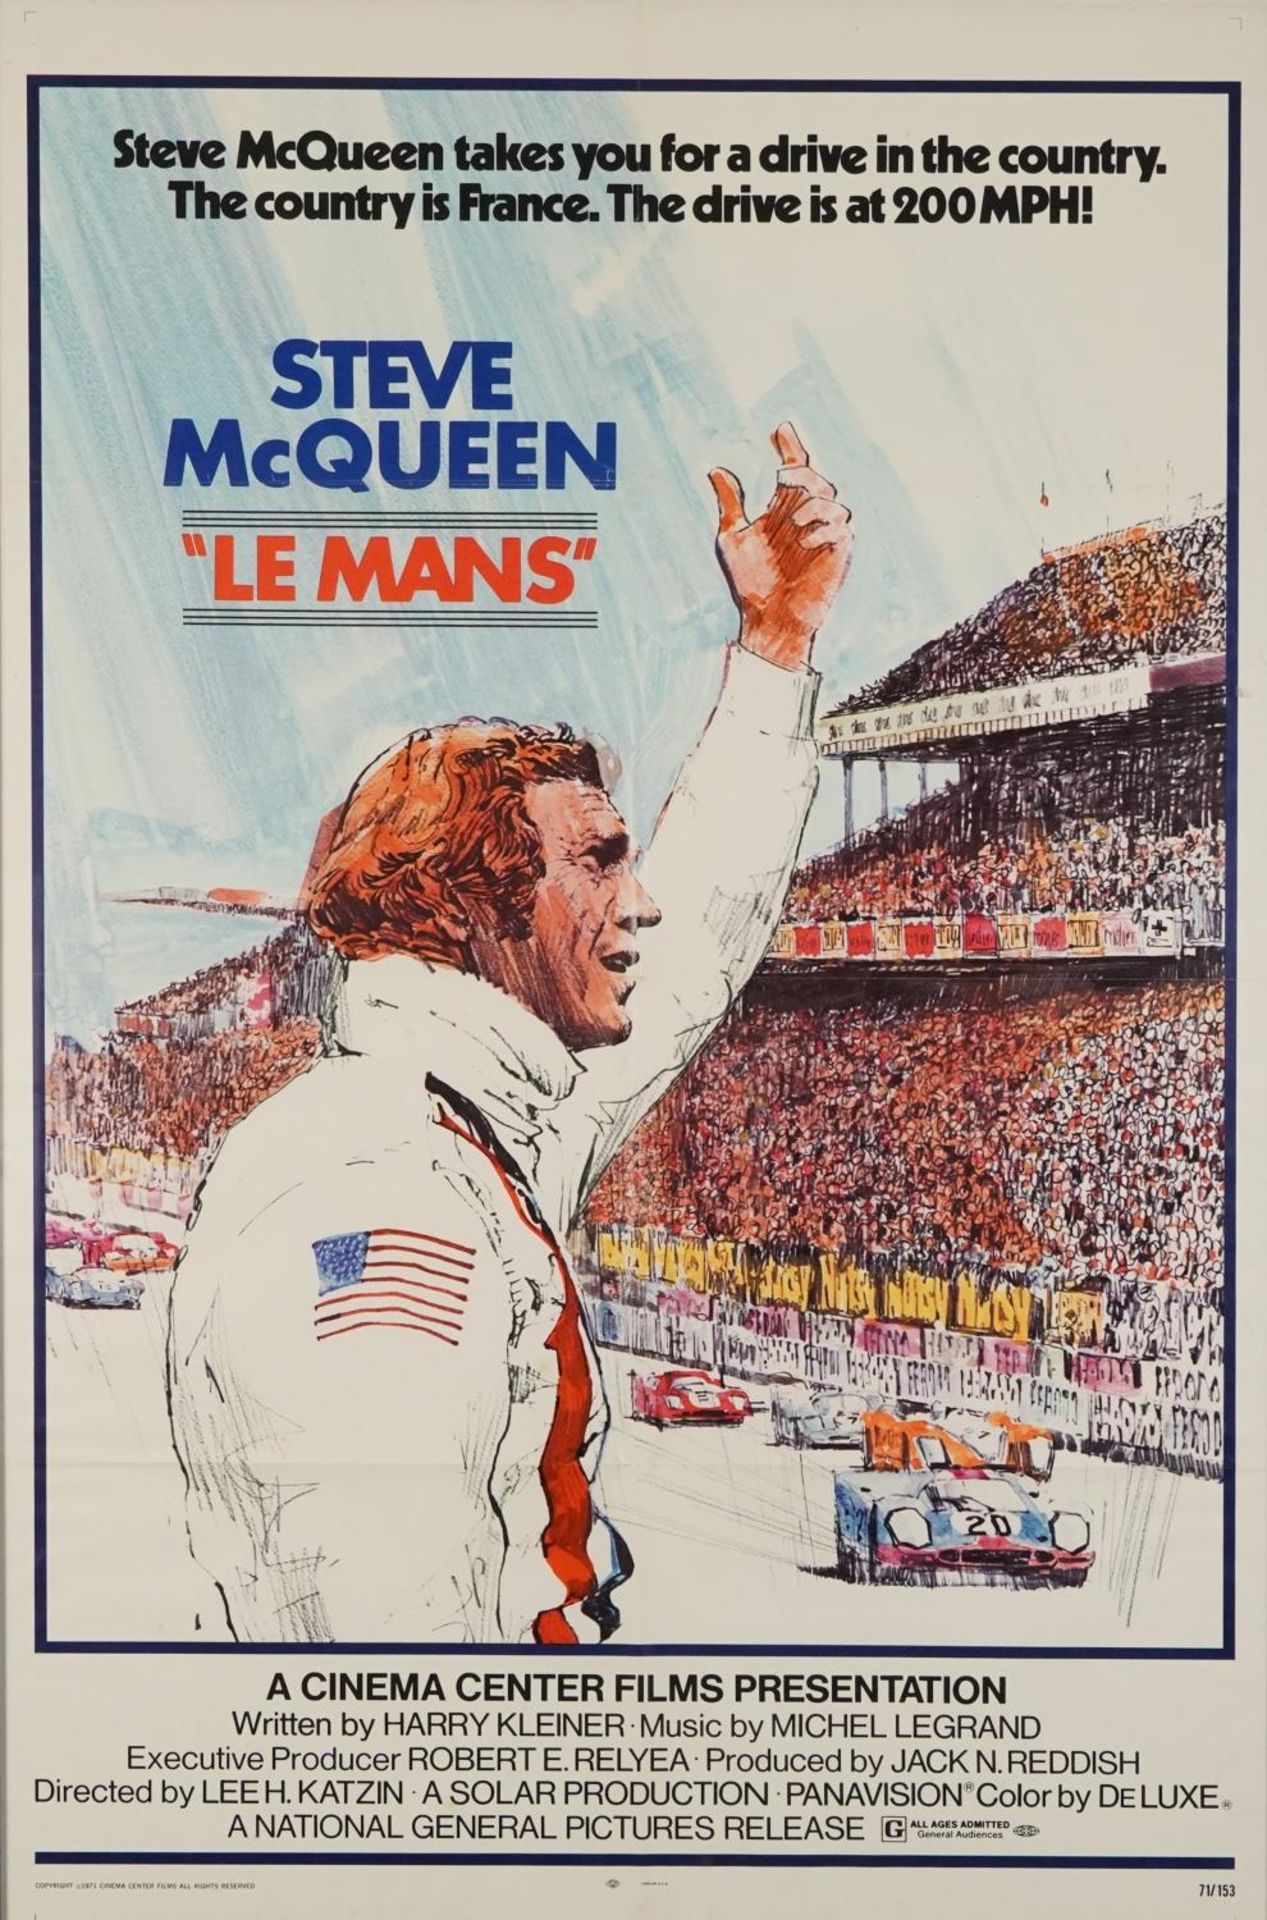 Steve McQueen interest Le Mans film poster, copyright 1971 Cinema Centre Films, USA, framed and